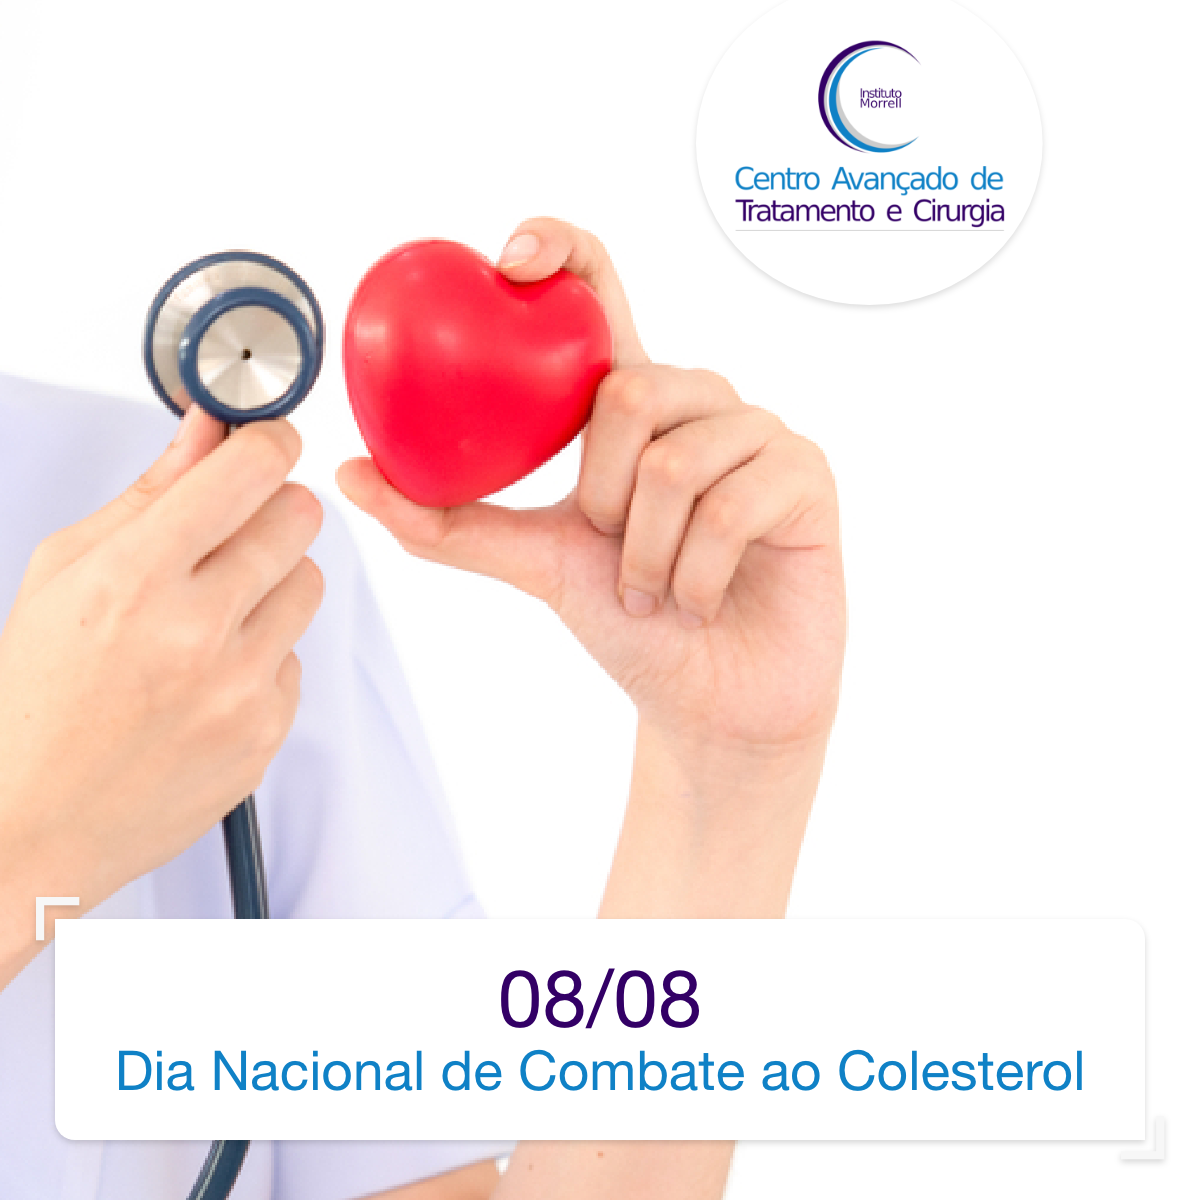 INSTITUTO_MORRELL-2018-08-08-Dia_Nacional_de_Combate_ao_Colesterol-1200x1200.png